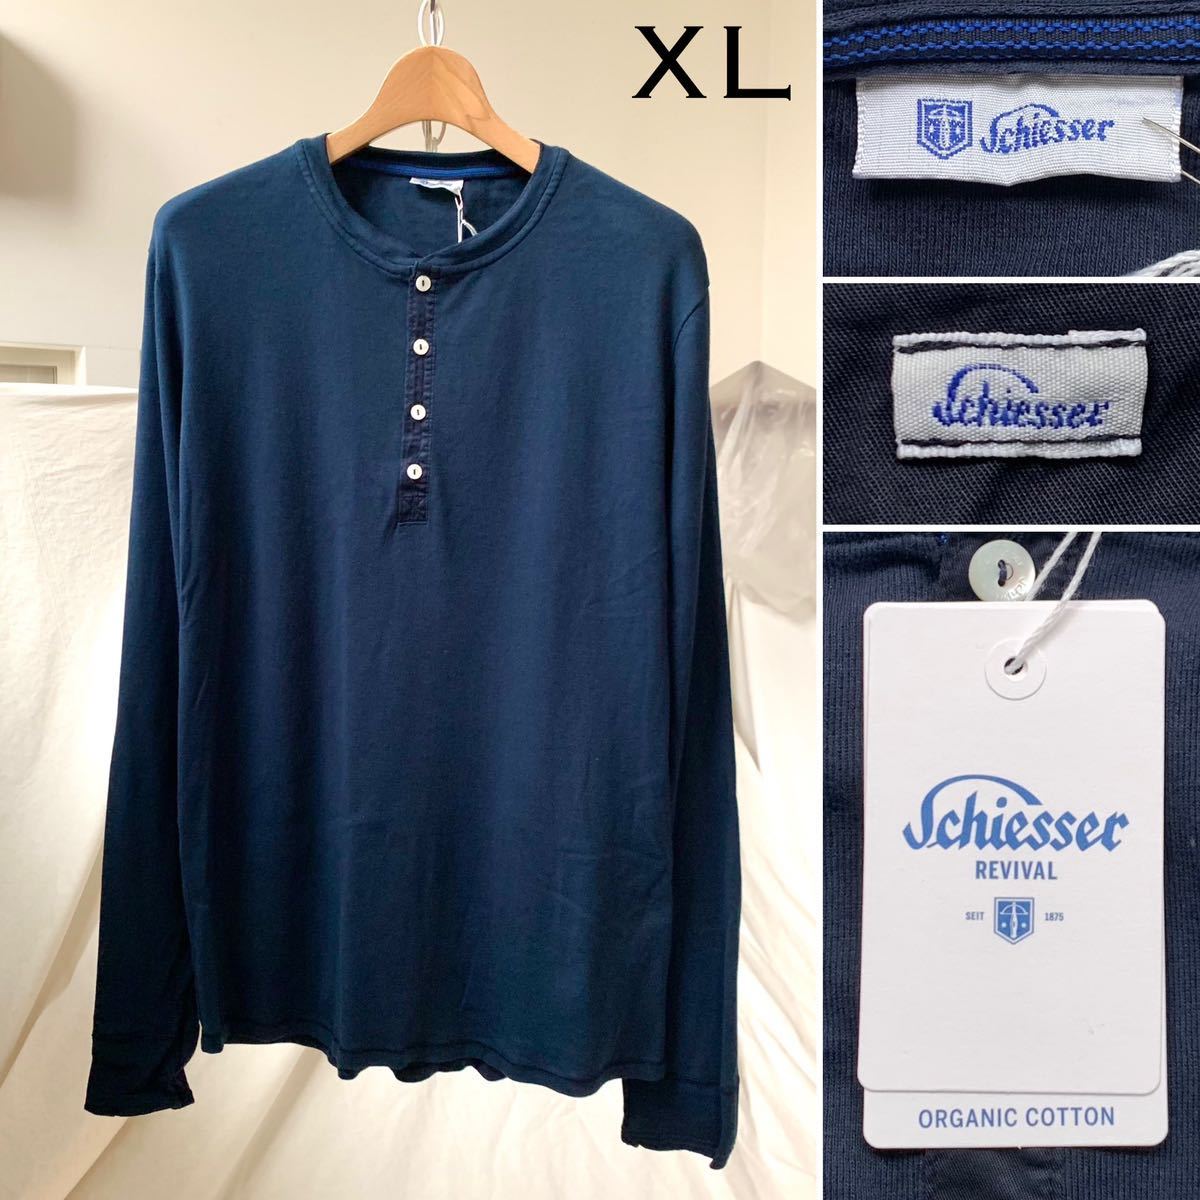 XL 新品 Schiesser シーサー 定番 ヘンリーネック 長袖 Tシャツ KARL-HEINZ カールハインツ ダークブルー 7 定1.43万 メンズ カットソー